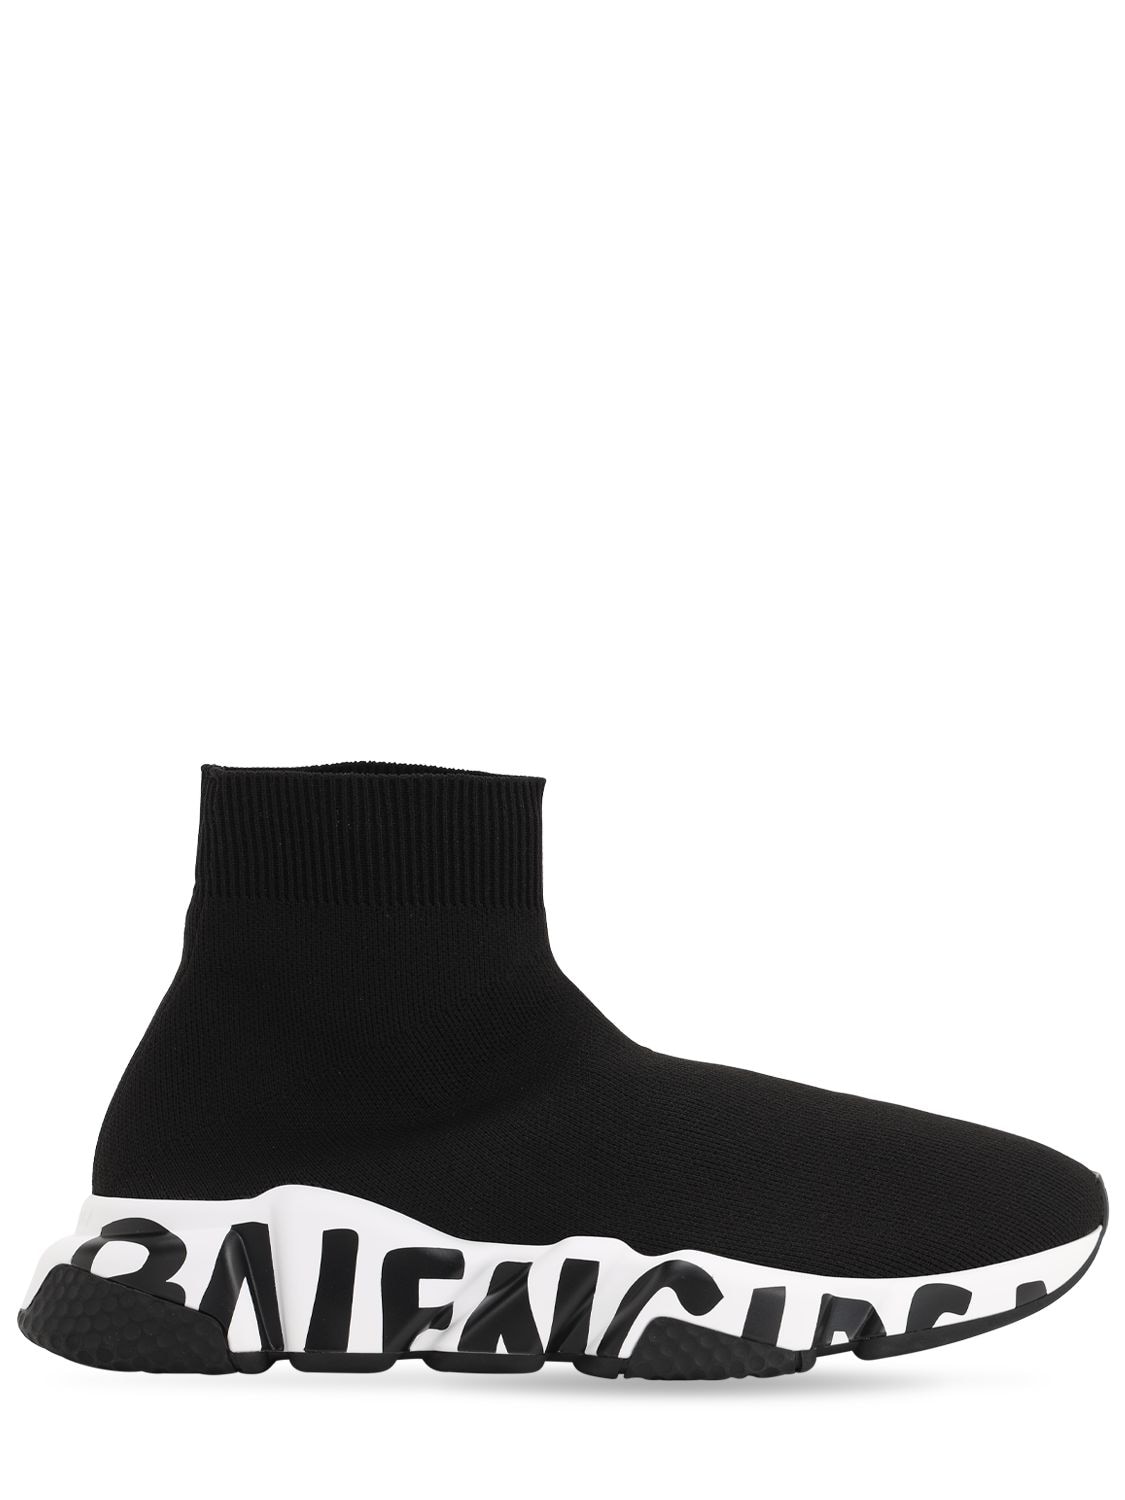 balenciaga sneakers black and white